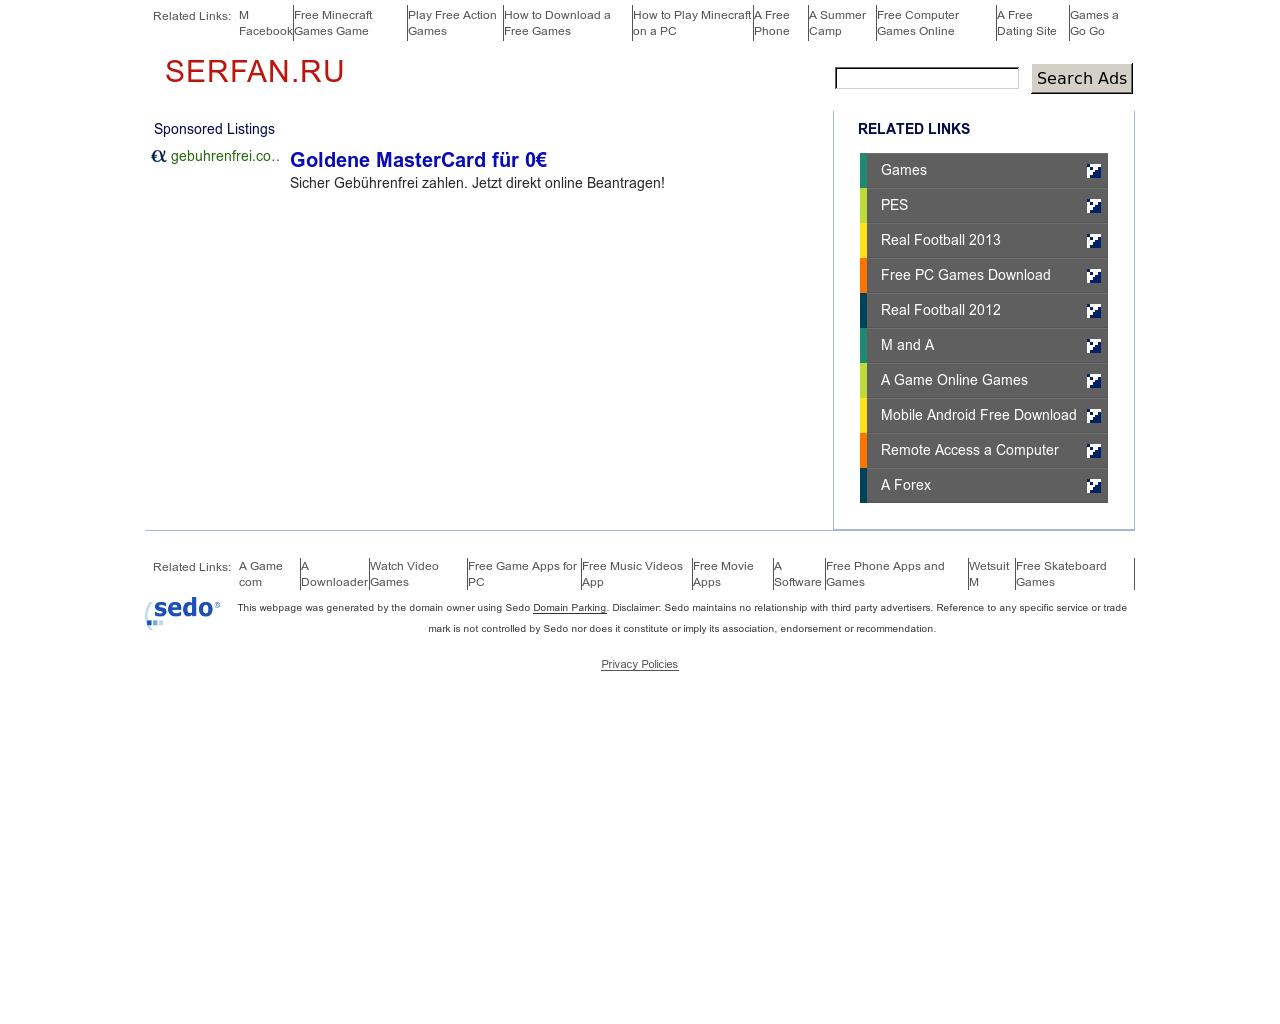 Изображение сайта serfan.ru в разрешении 1280x1024